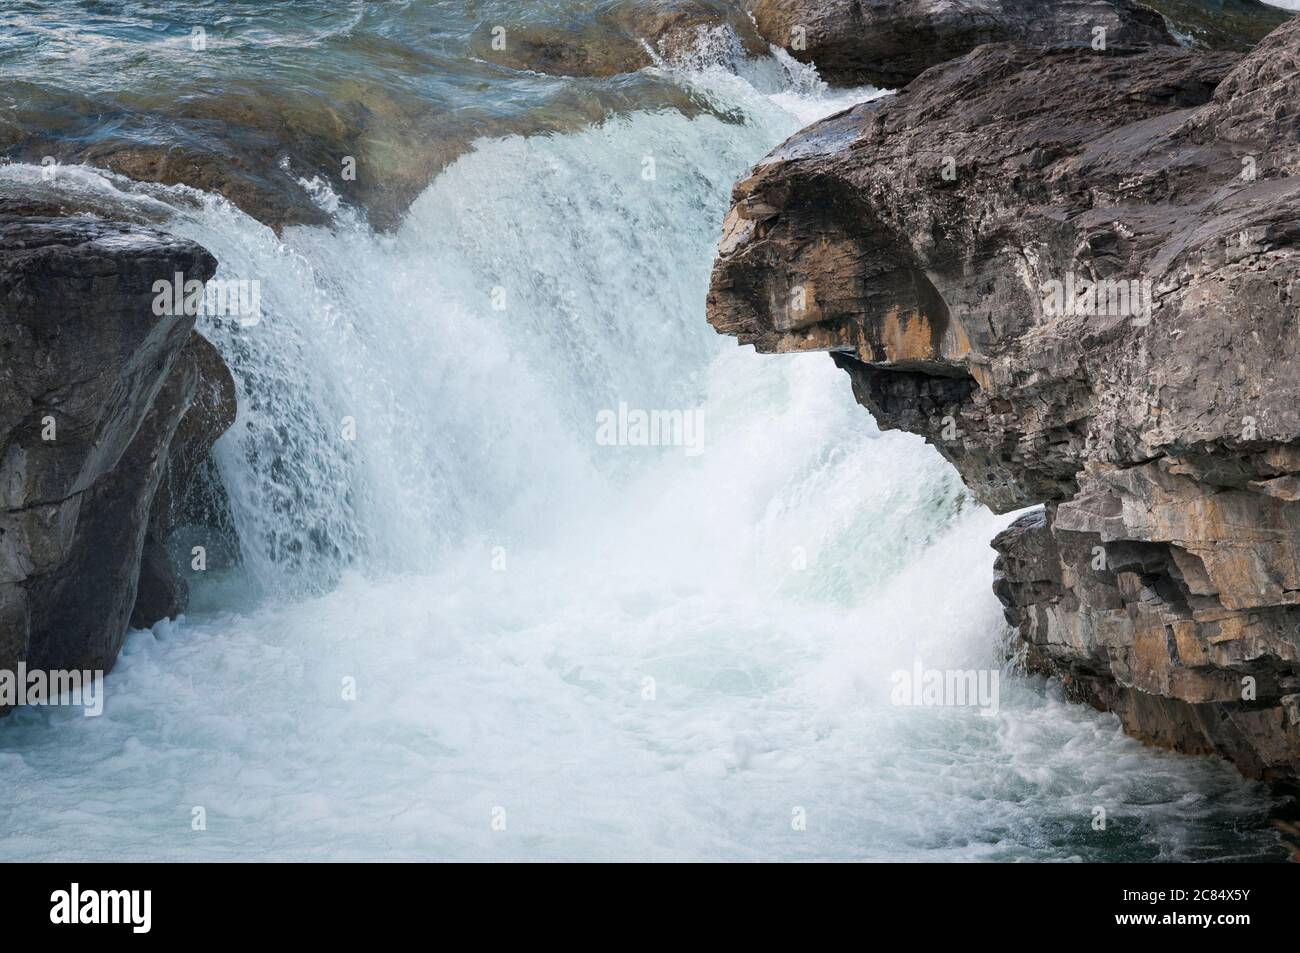 The Elbow River at Elbow Falls, Bragg Creek, Alberta, Canada. Stock Photo